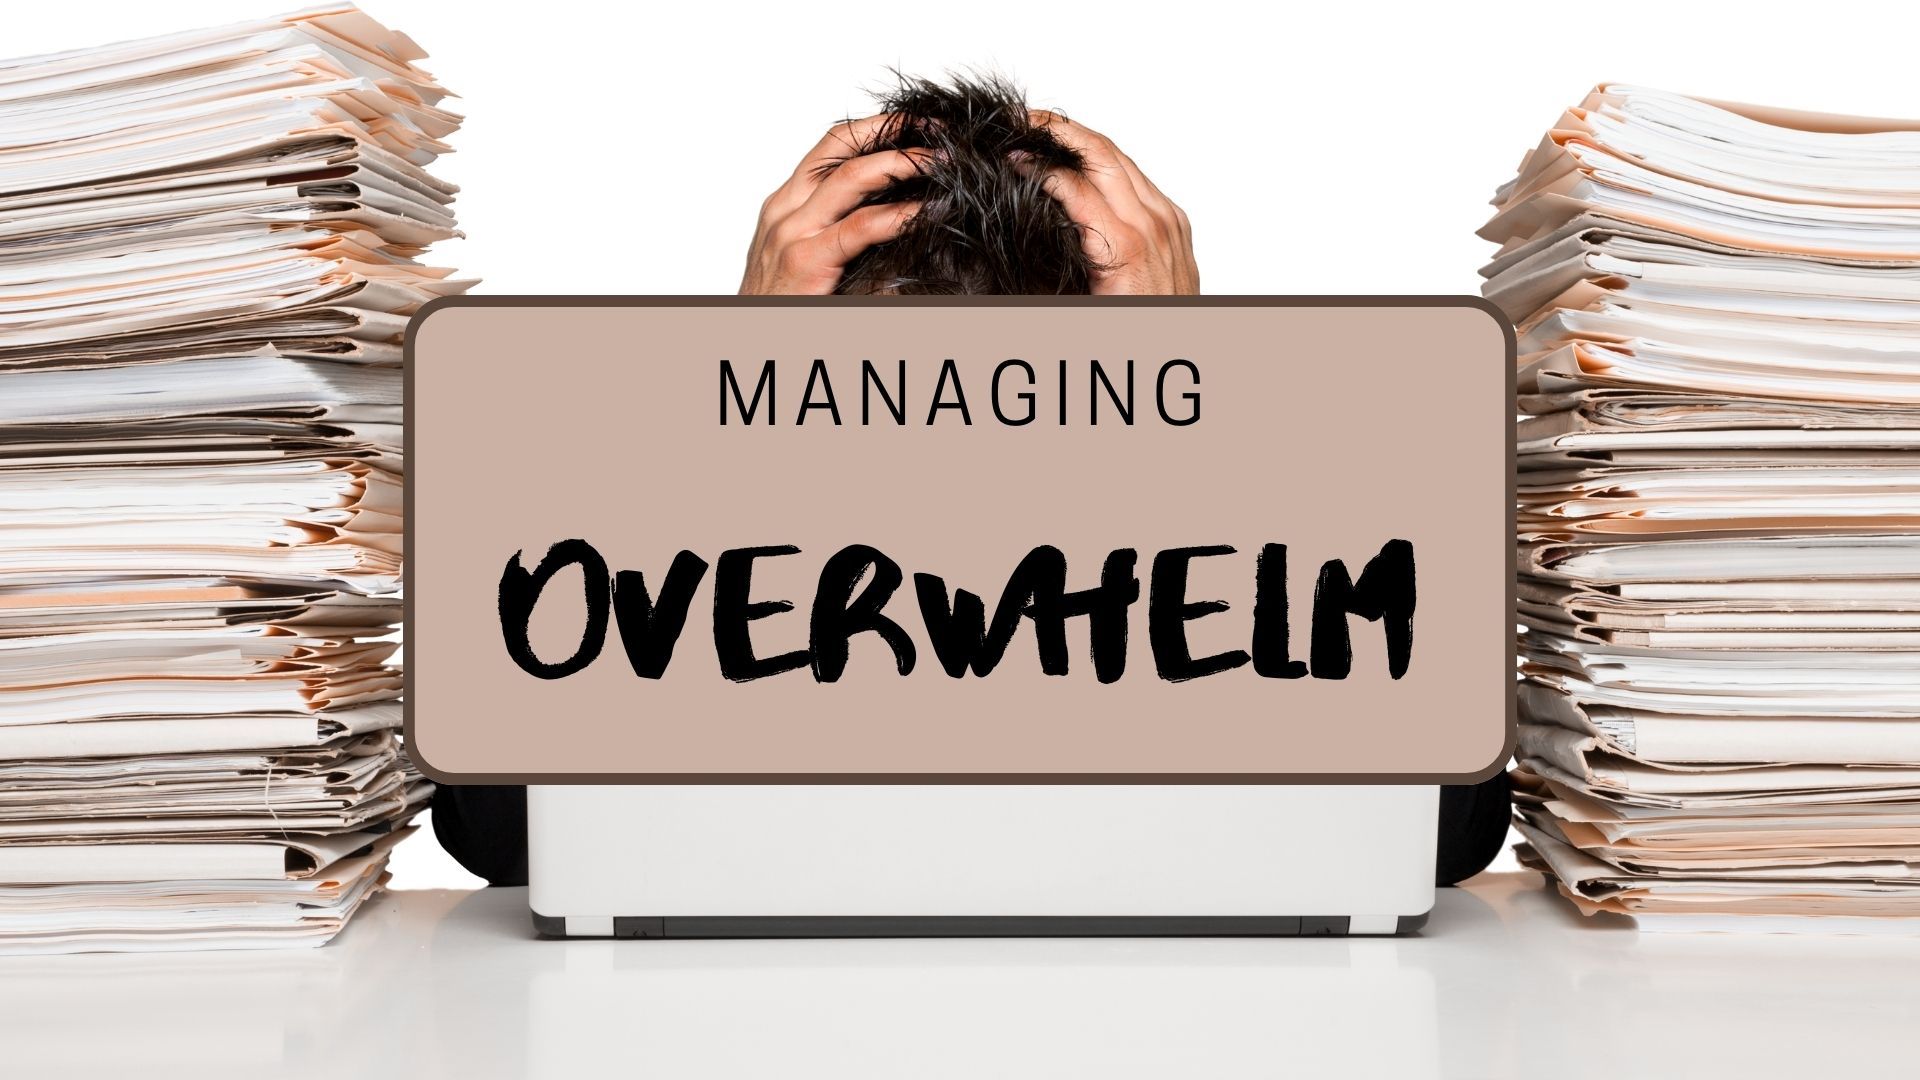 Managing Overwhelm